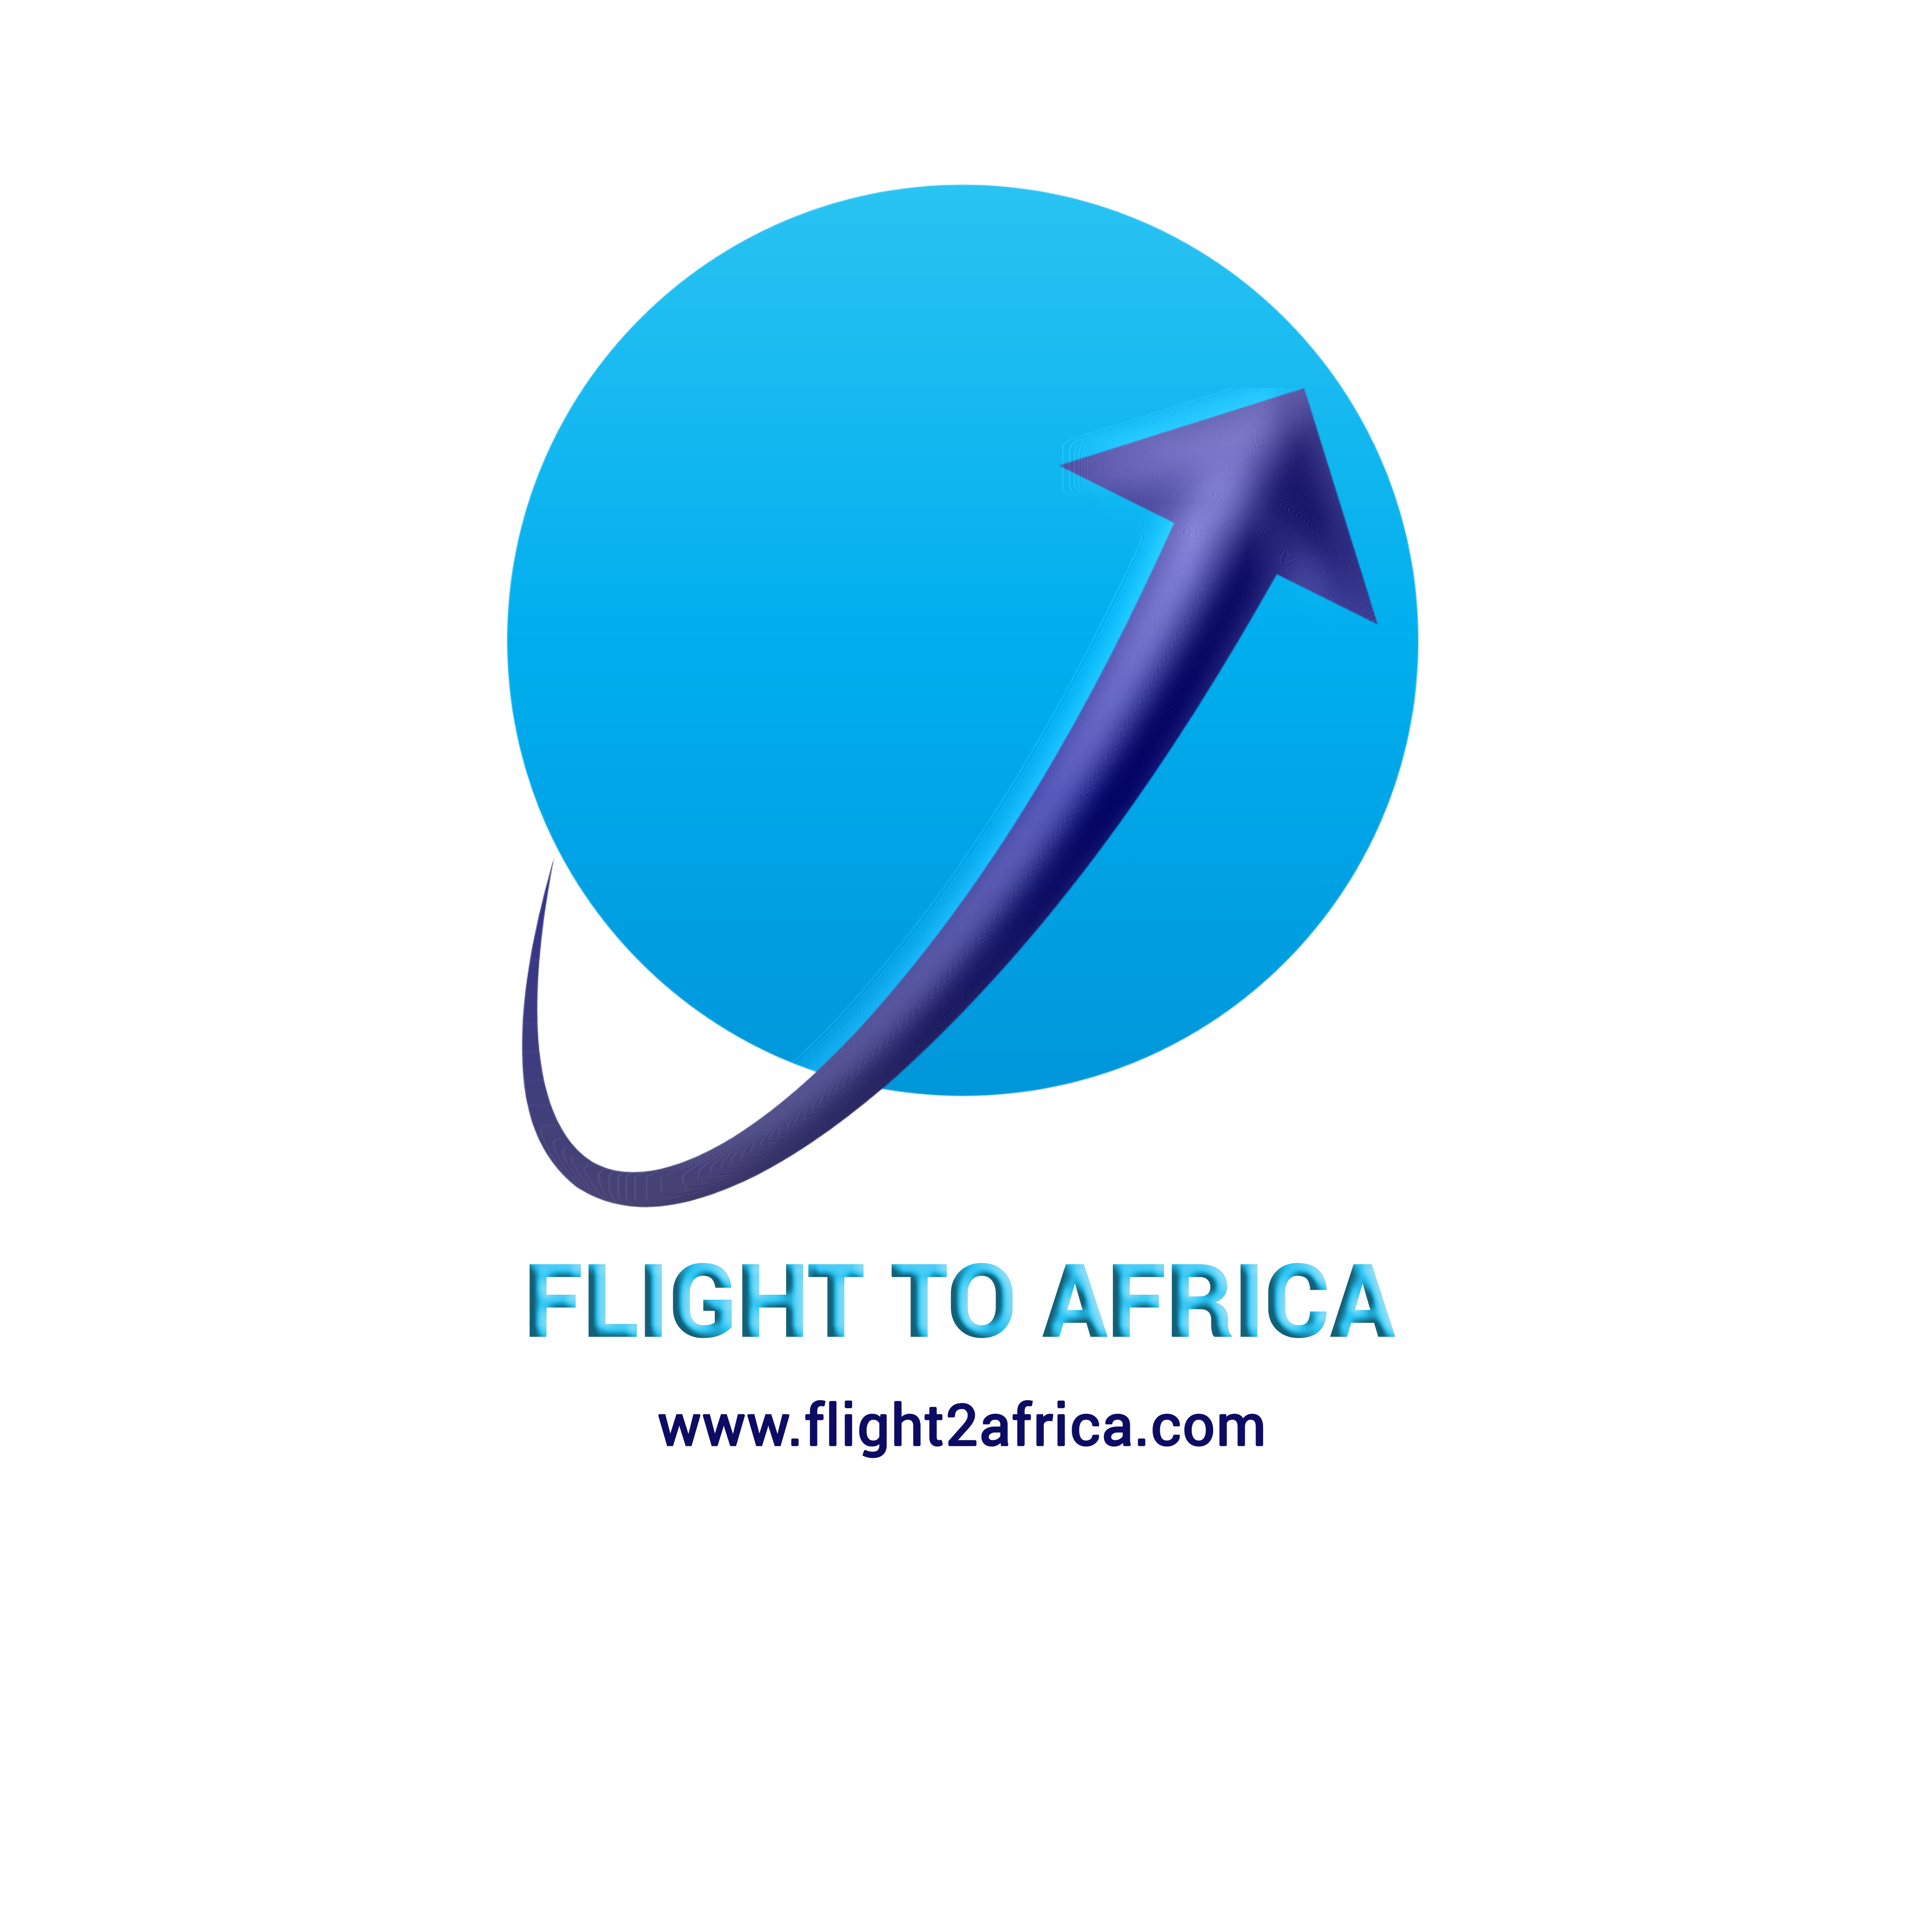 (c) Flight2africa.com